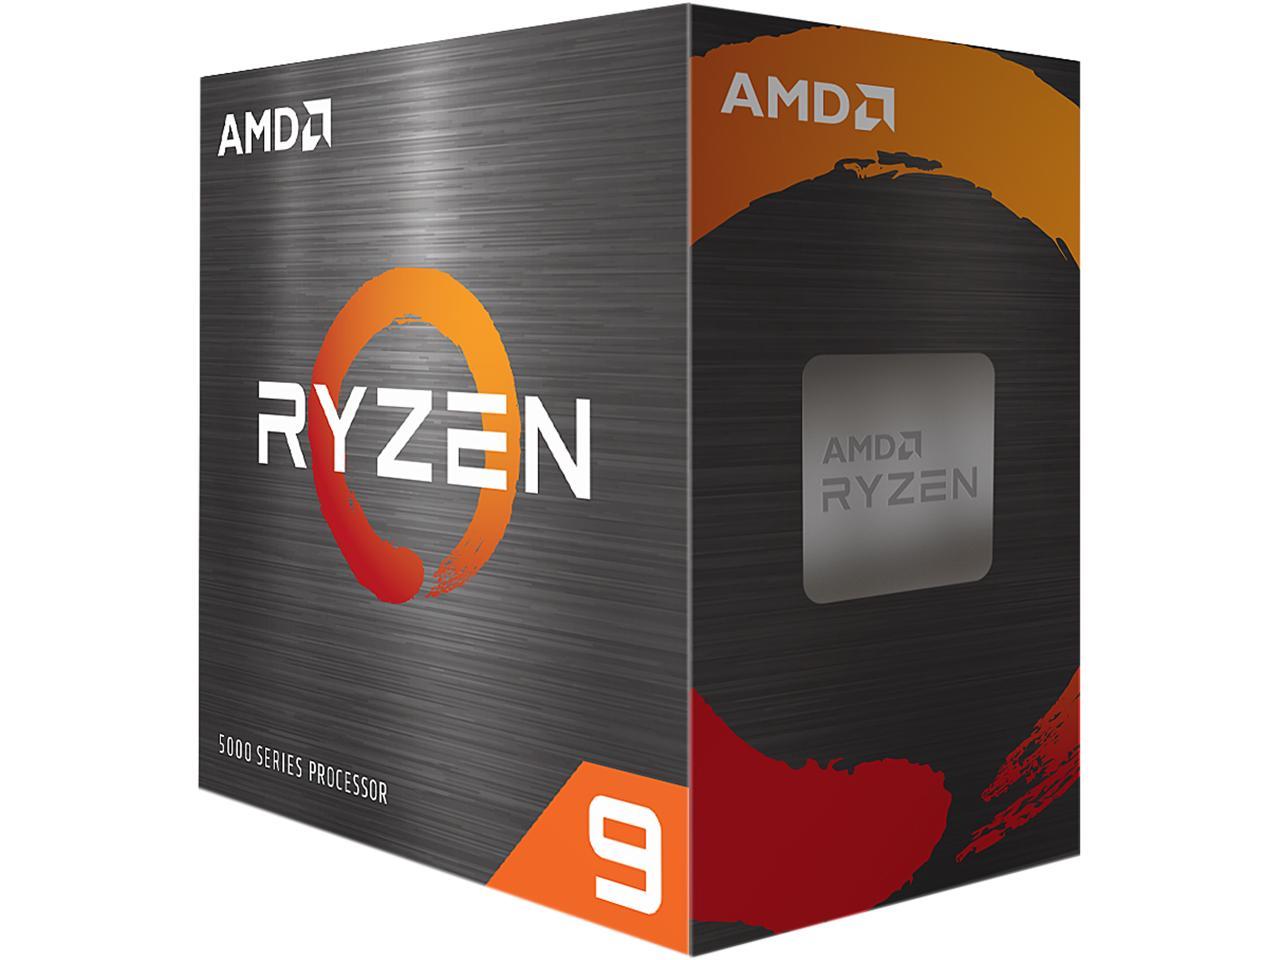 AMD Ryzen 9 5900X 105W AM4 Desktop Processor CPU $321 + Free Shipping